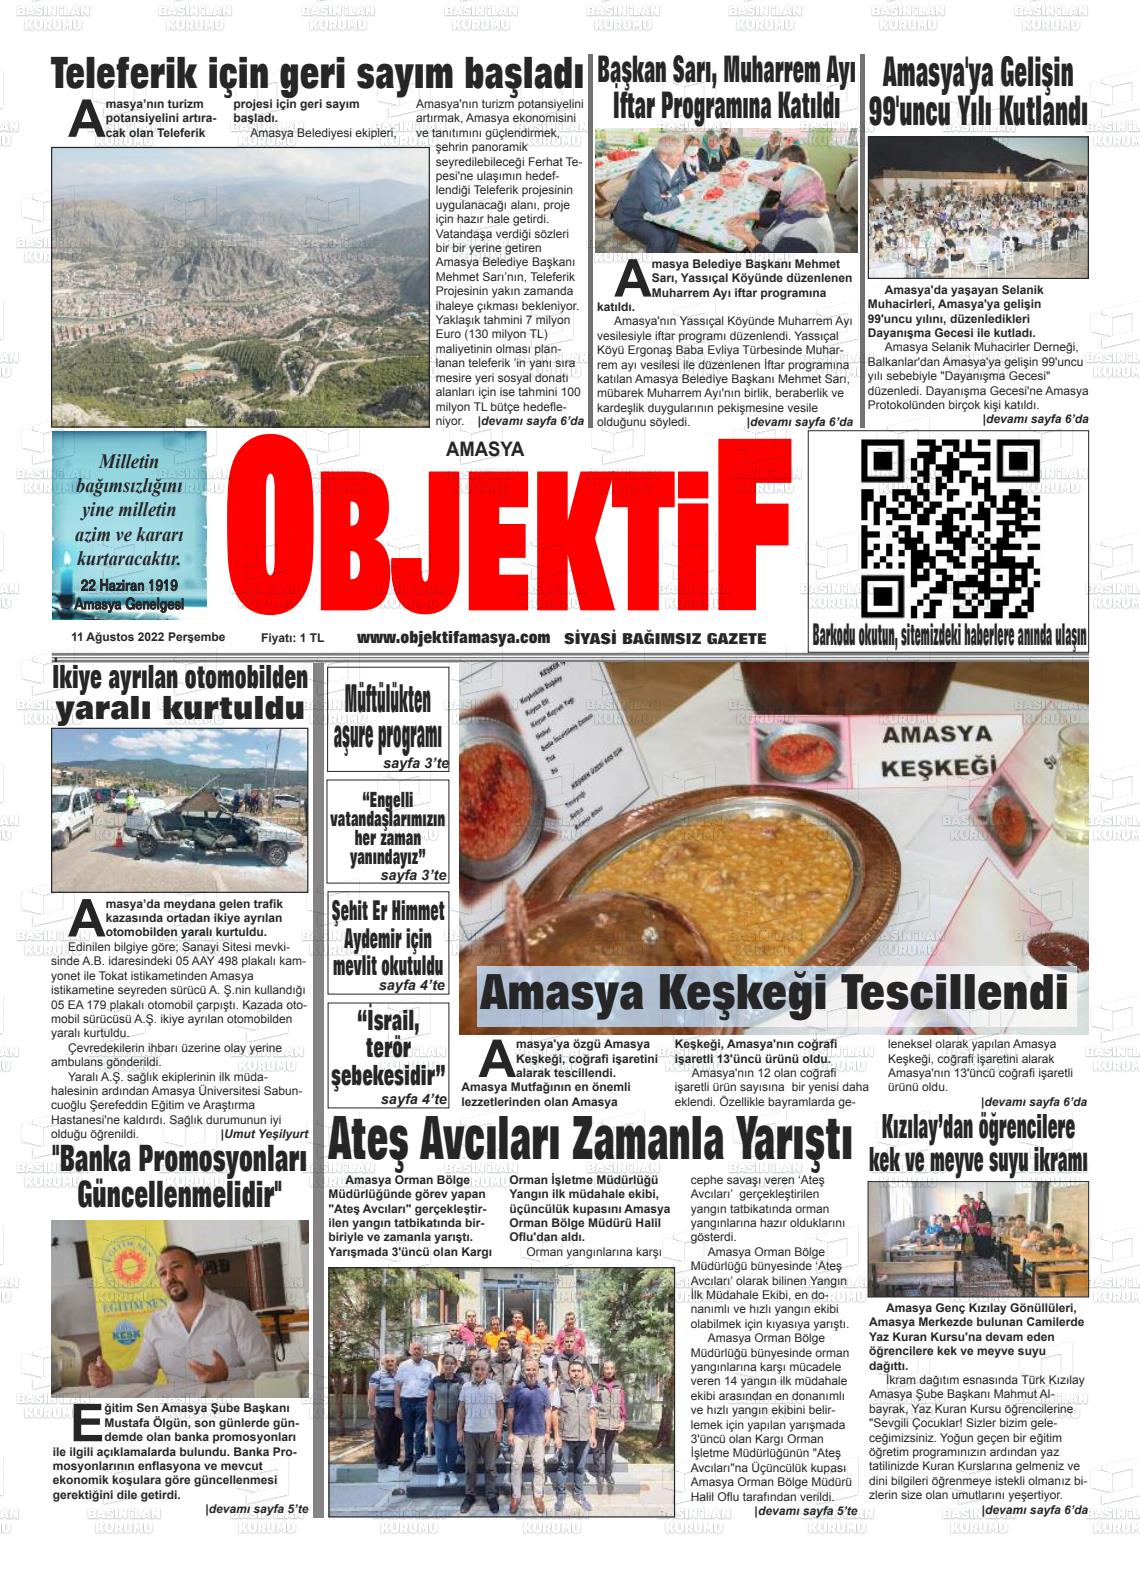 11 Ağustos 2022 Amasya Objektif Gazete Manşeti